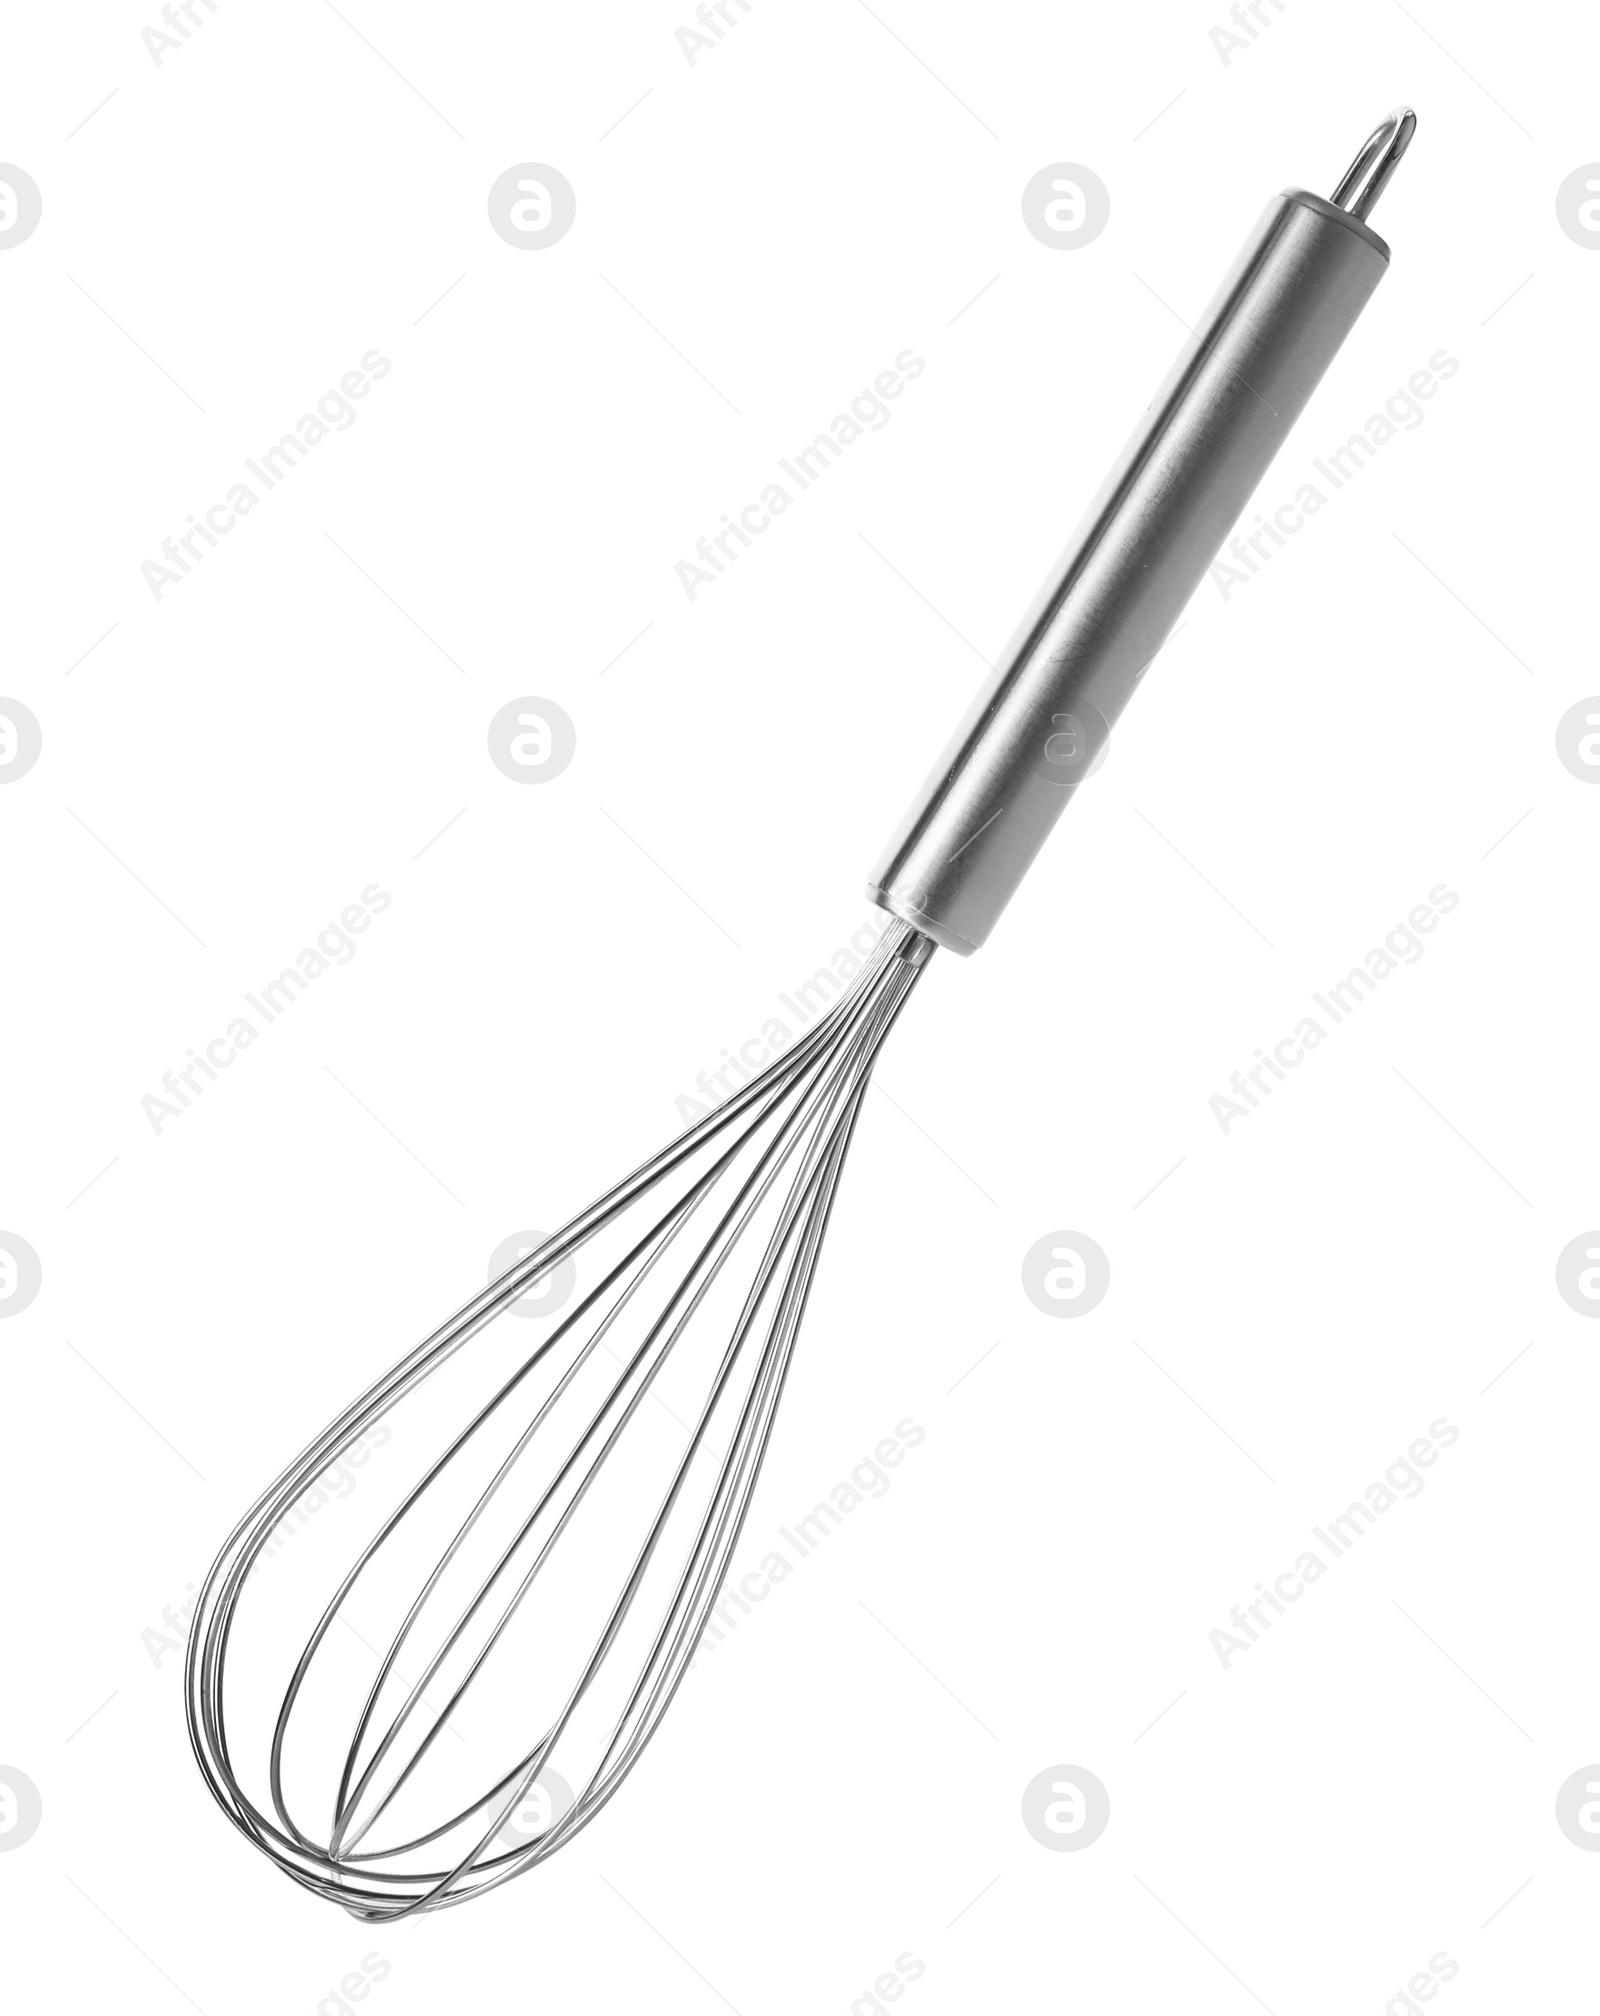 Photo of Balloon whisk on white background. Kitchen utensils